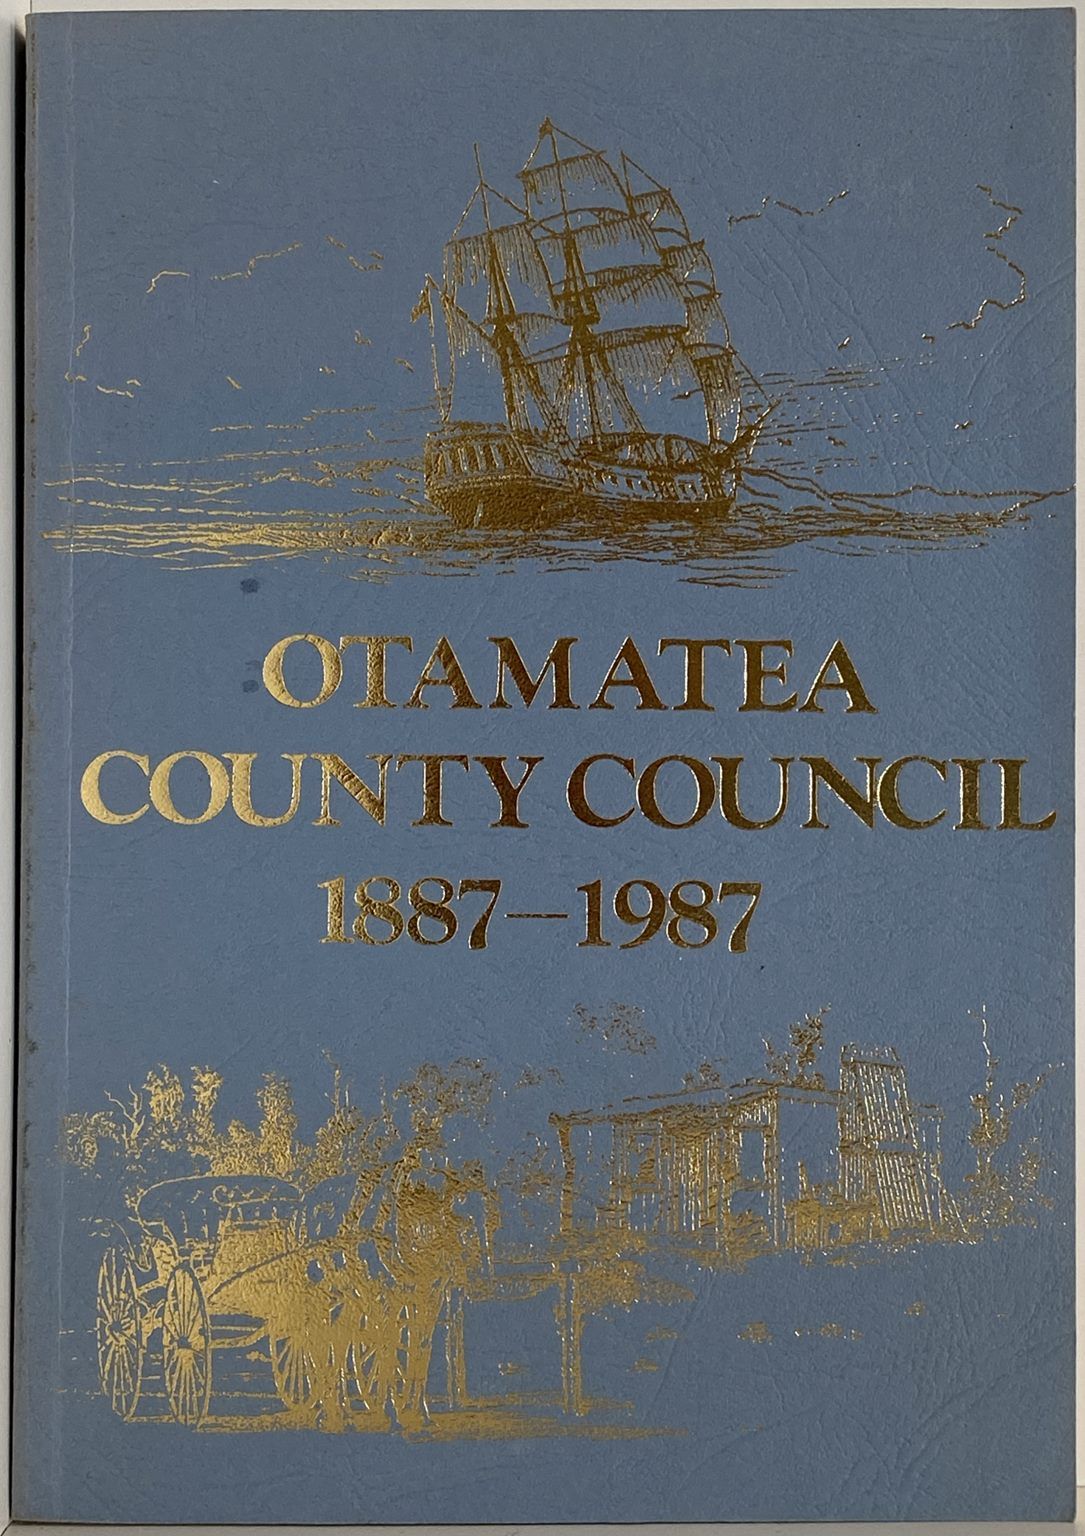 OTAMATEA COUNTY COUNCIL: Centenary 1887-1987